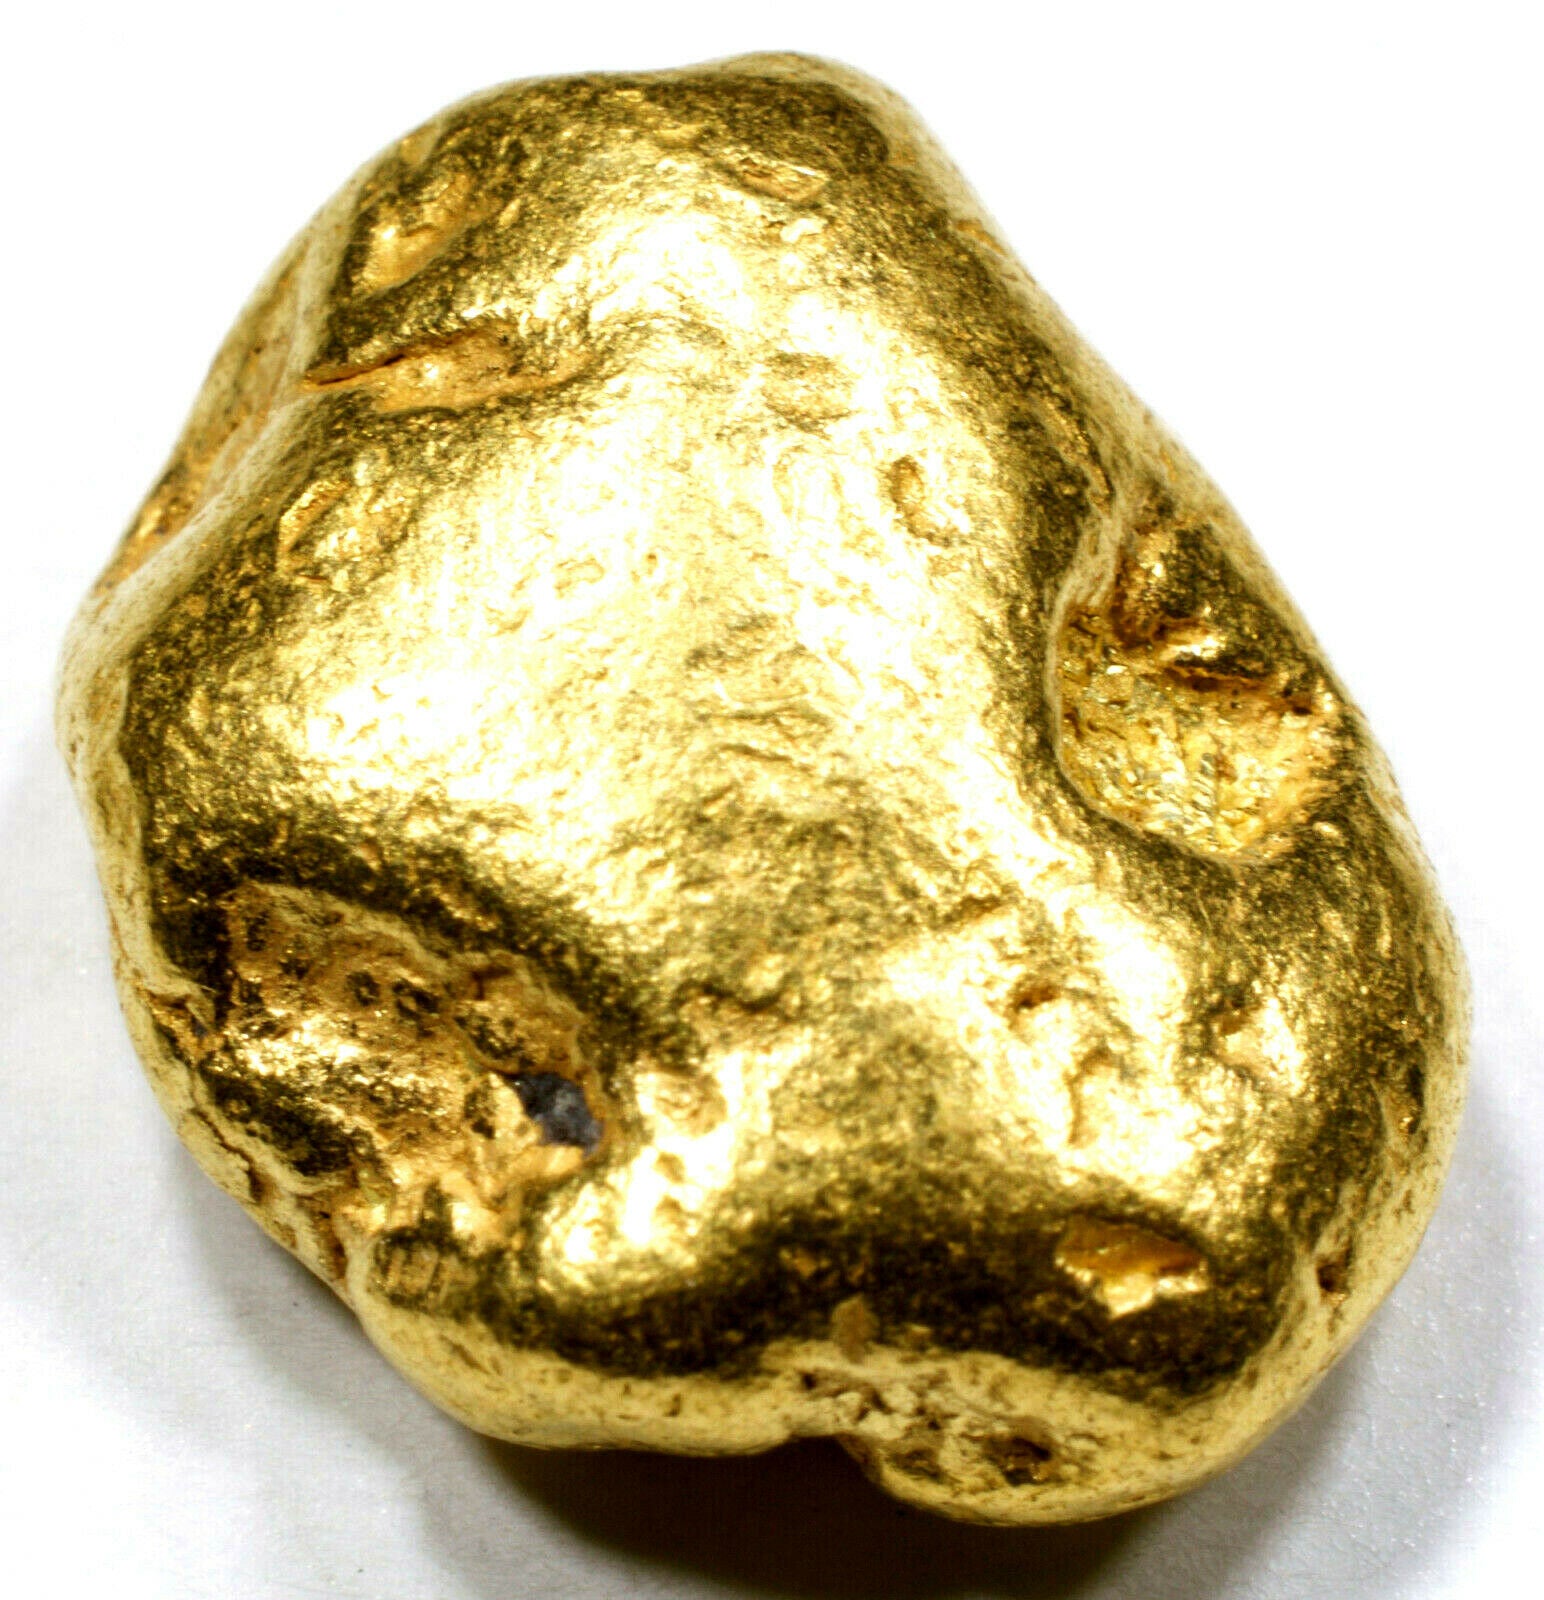 10.063 GRAMS ALASKAN YUKON NATURAL PURE GOLD NUGGET GENUINE (#N900) C GRADE - Liquidbullion